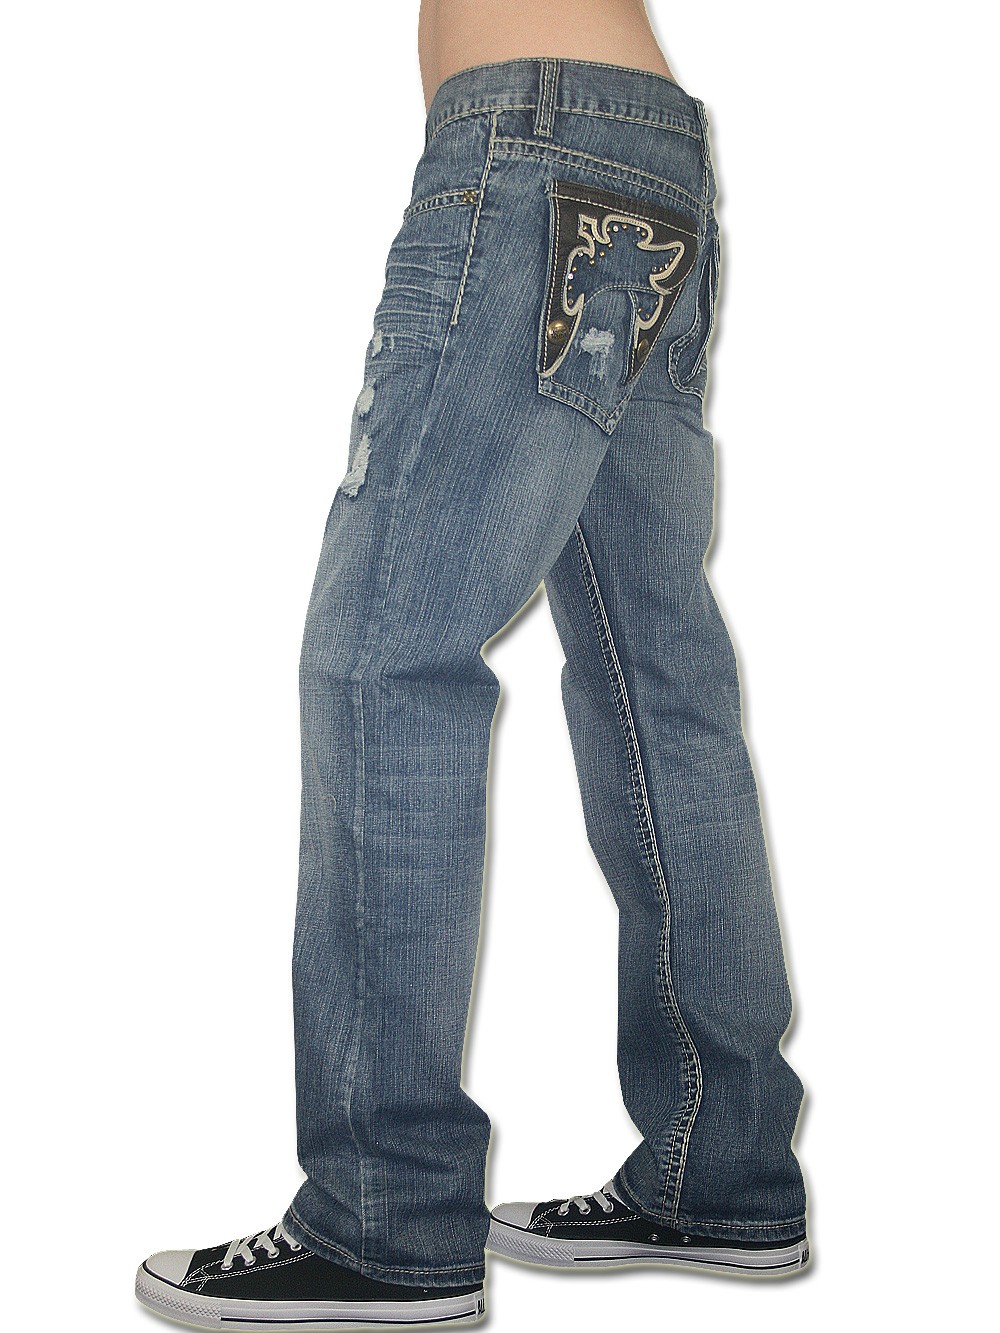 antique rivet herren jeans ashton - antique rivet 5154 - jeans